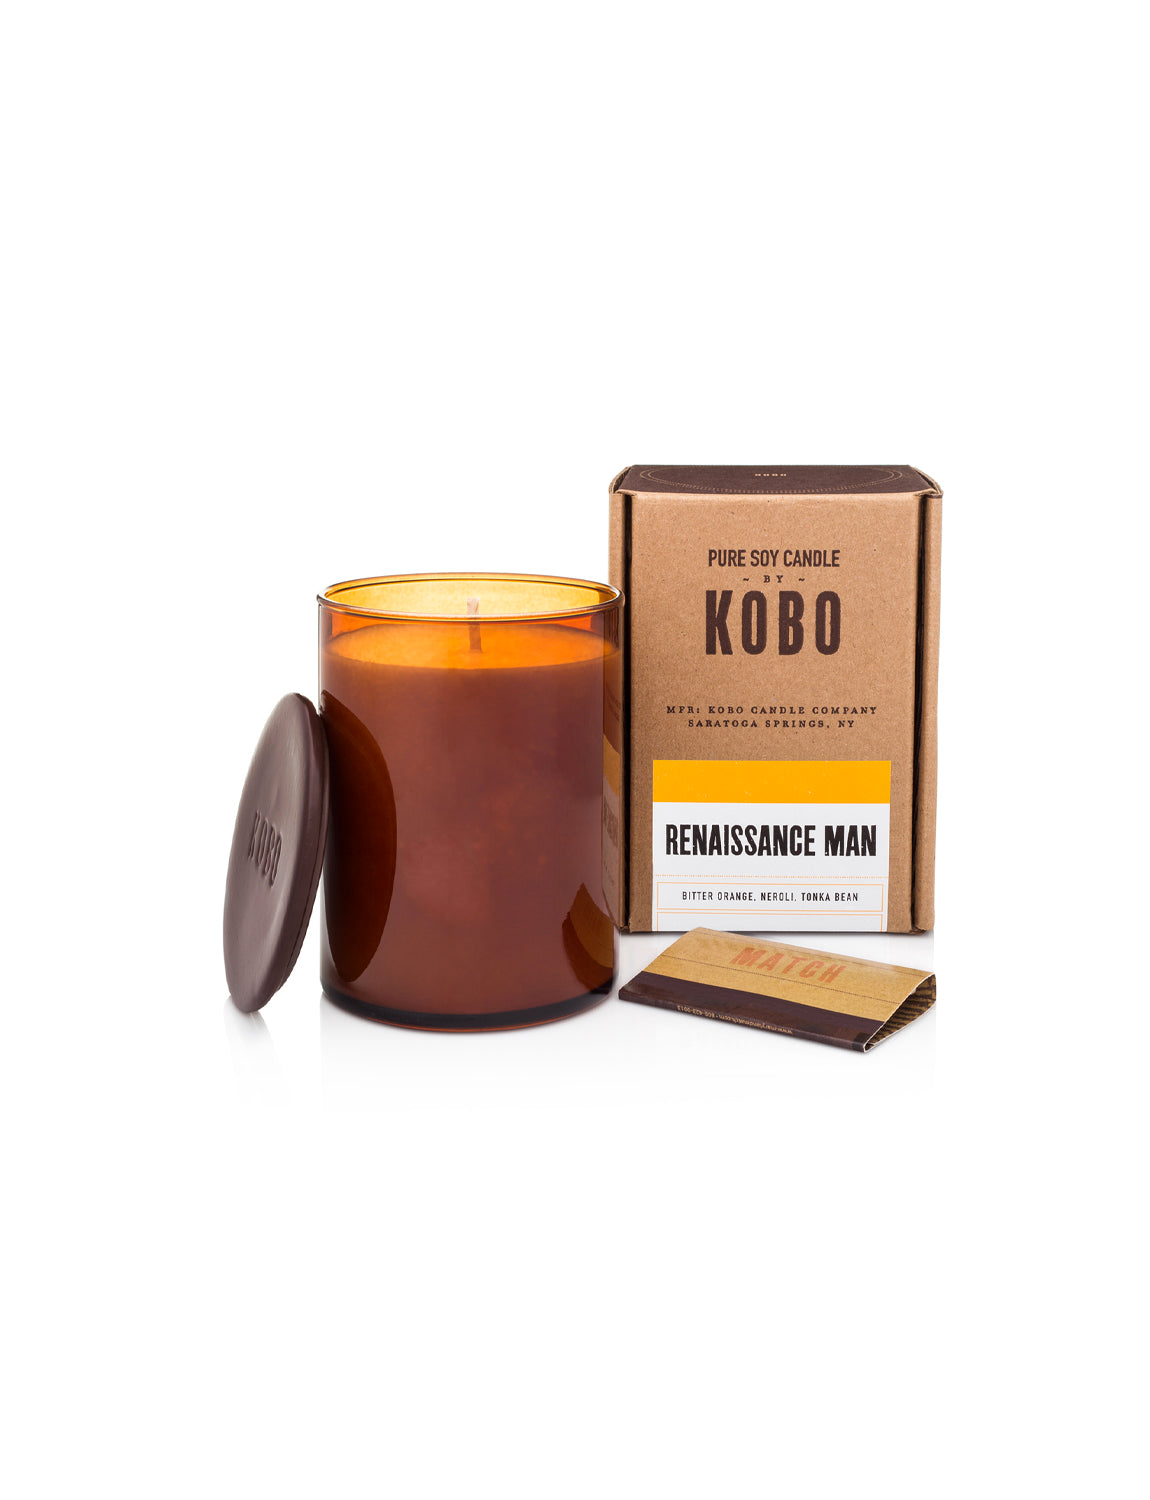 Kobo Candle, Golden Hour